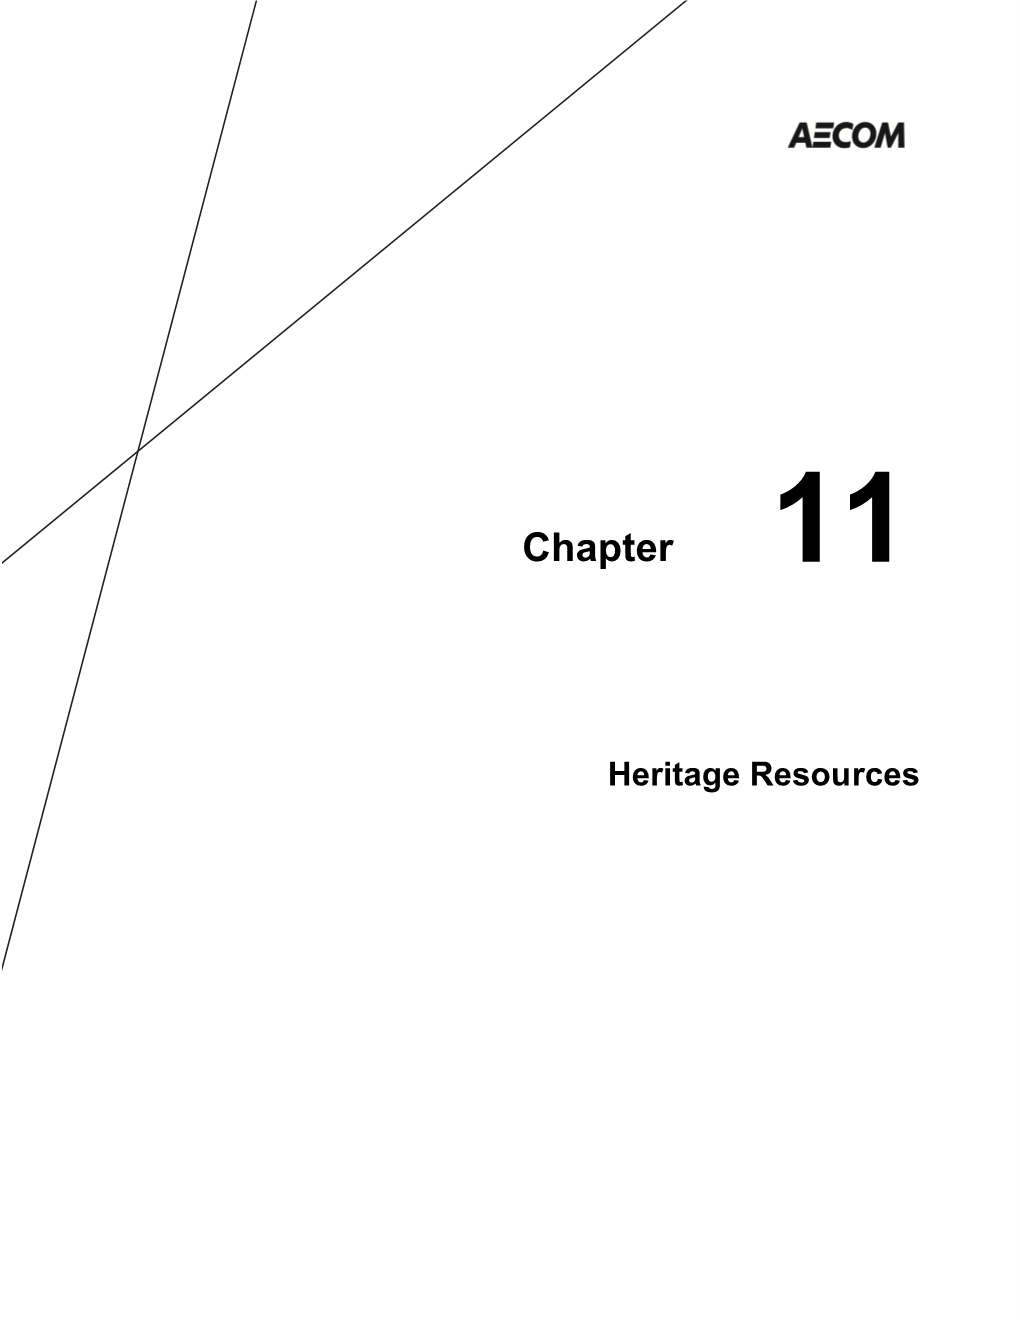 CEP Heritage Resources